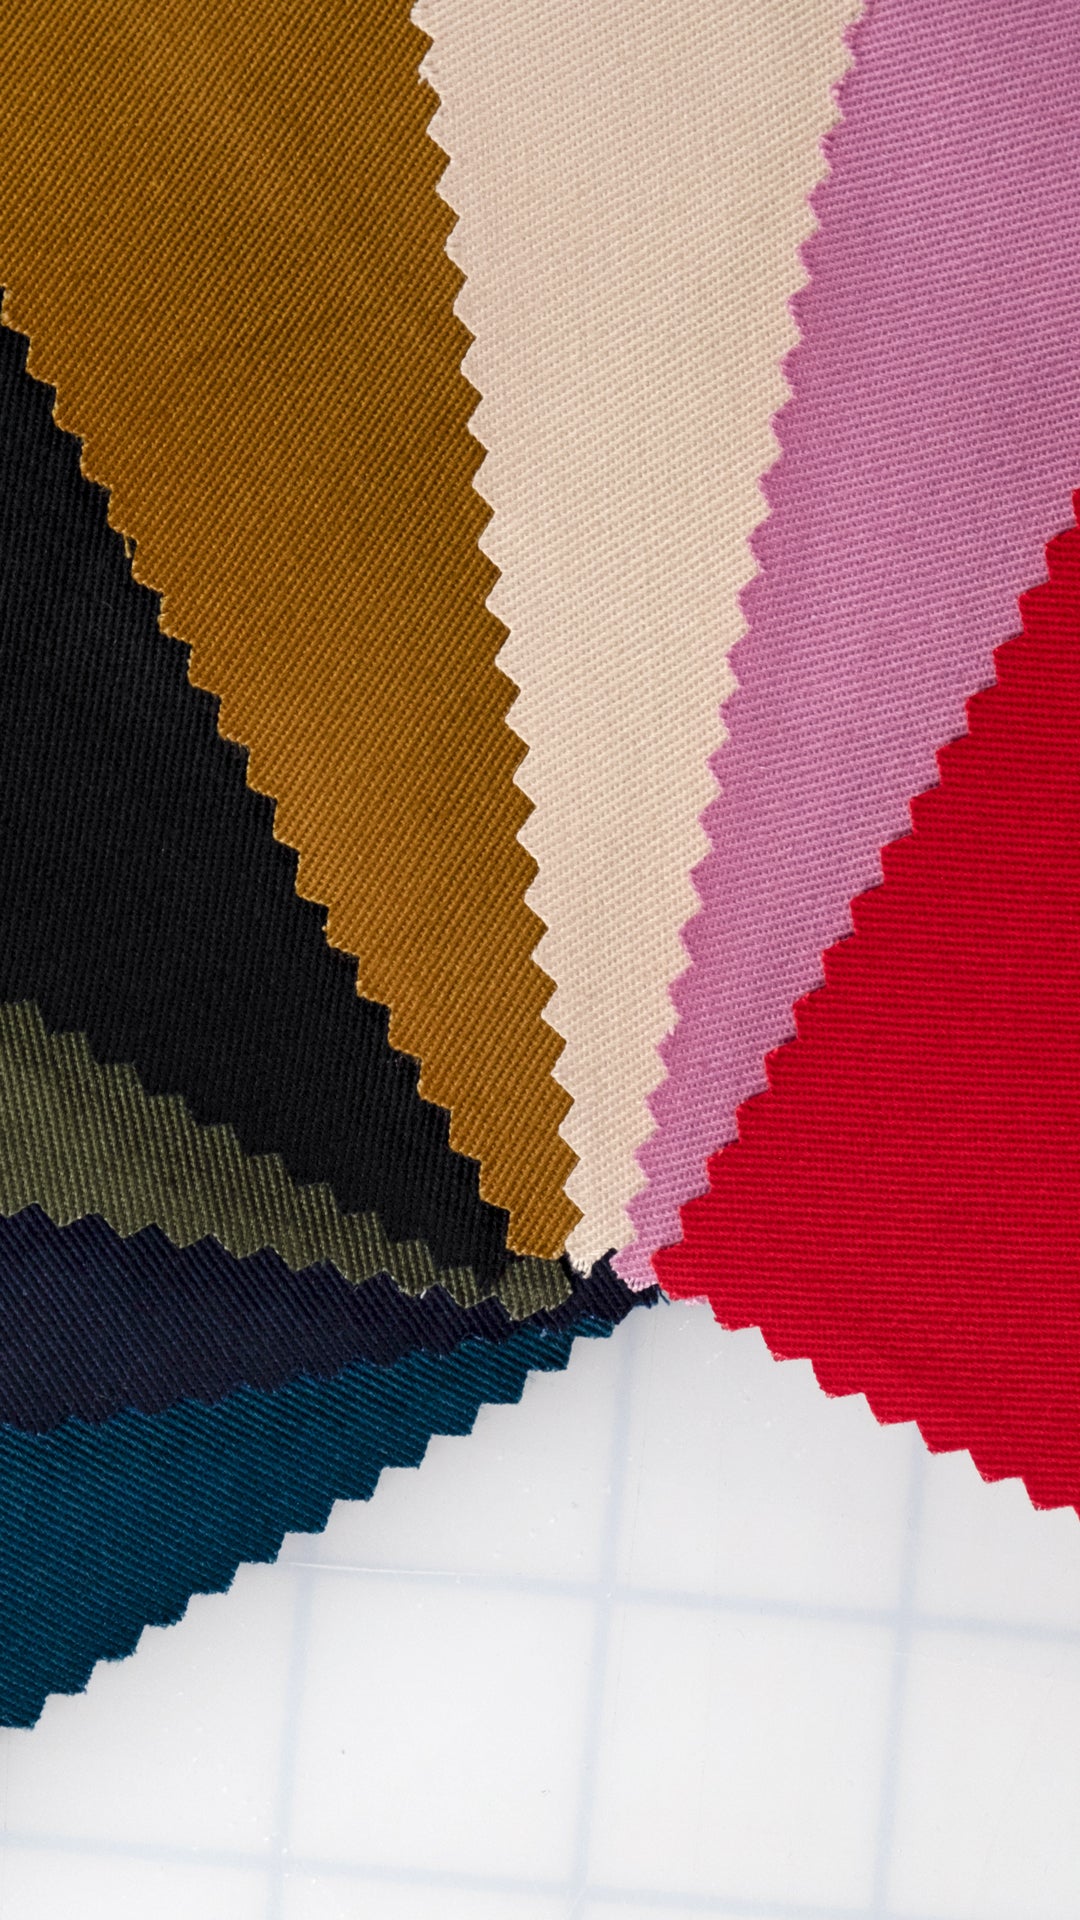 Blackbird Fabrics, Canadian Online Fabric Store